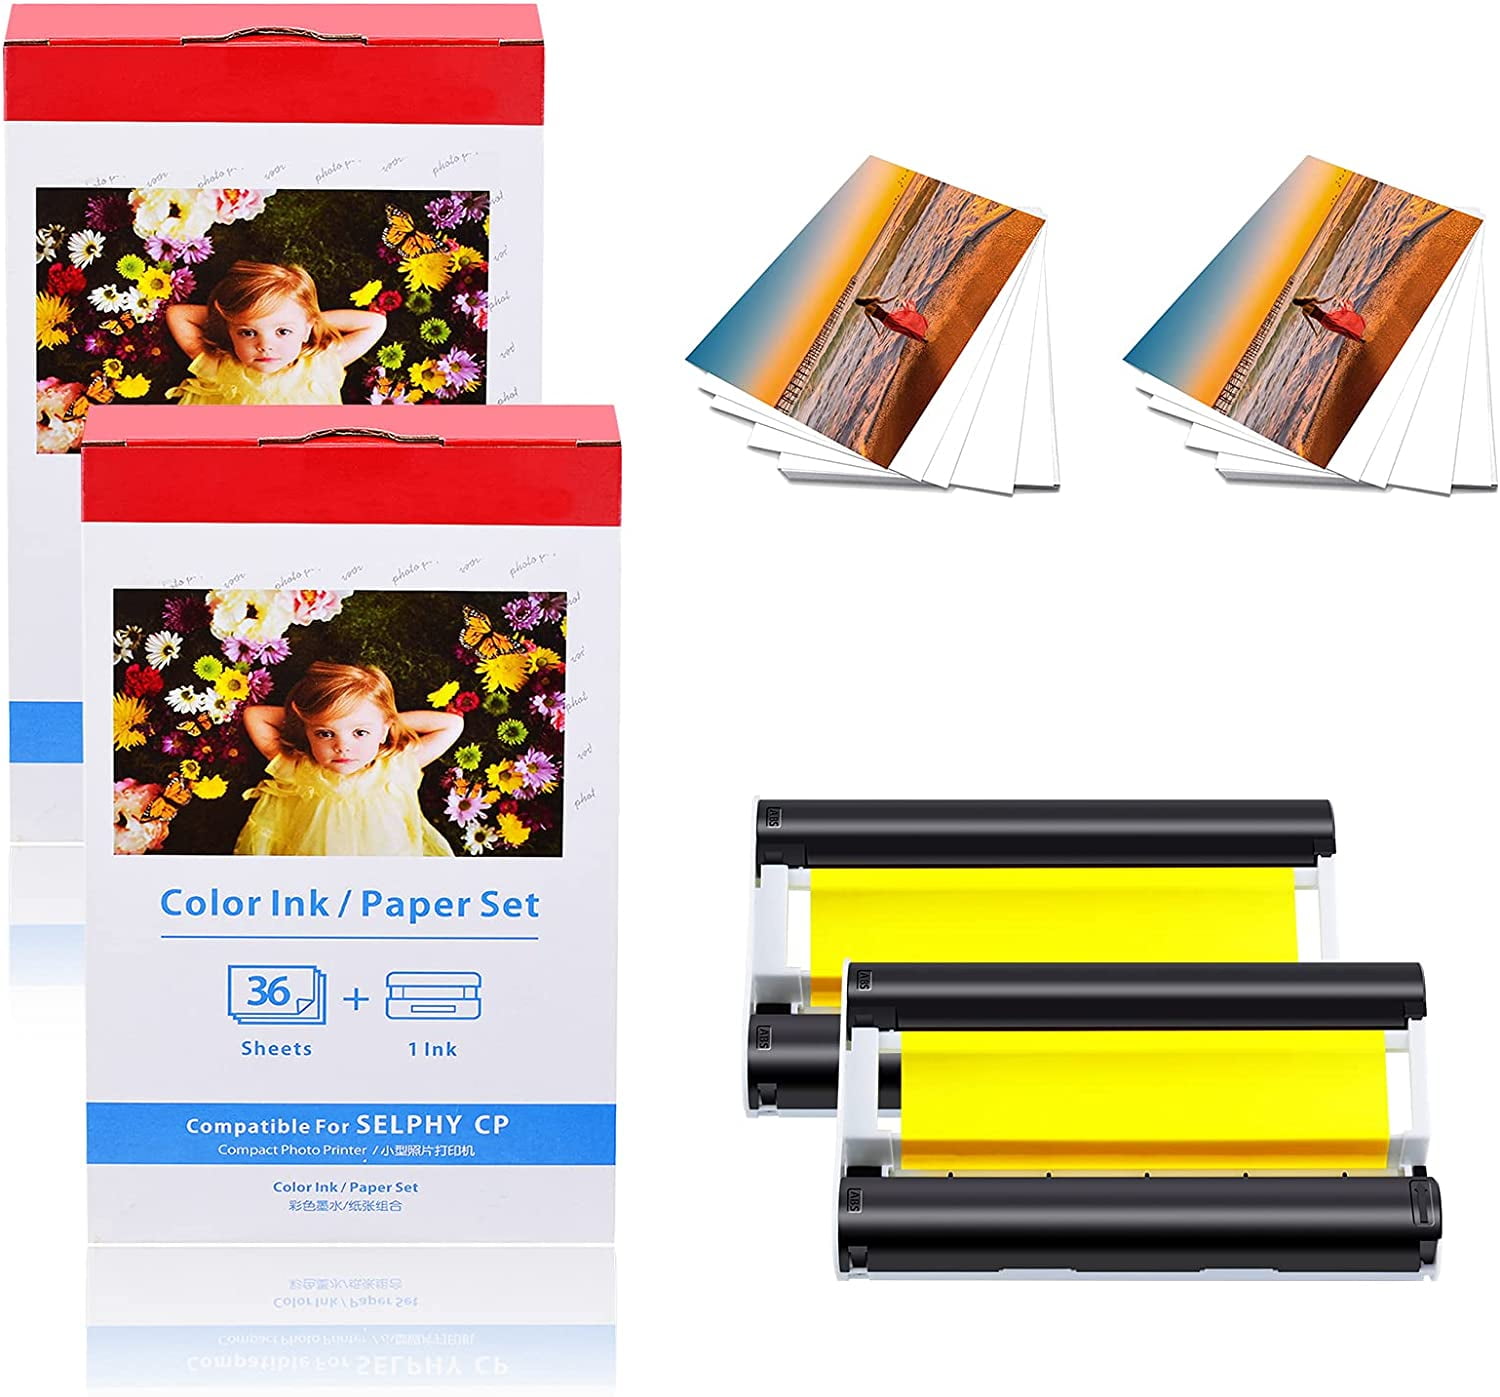 Canon KP-36IP Color Print Paper 36 Sheets